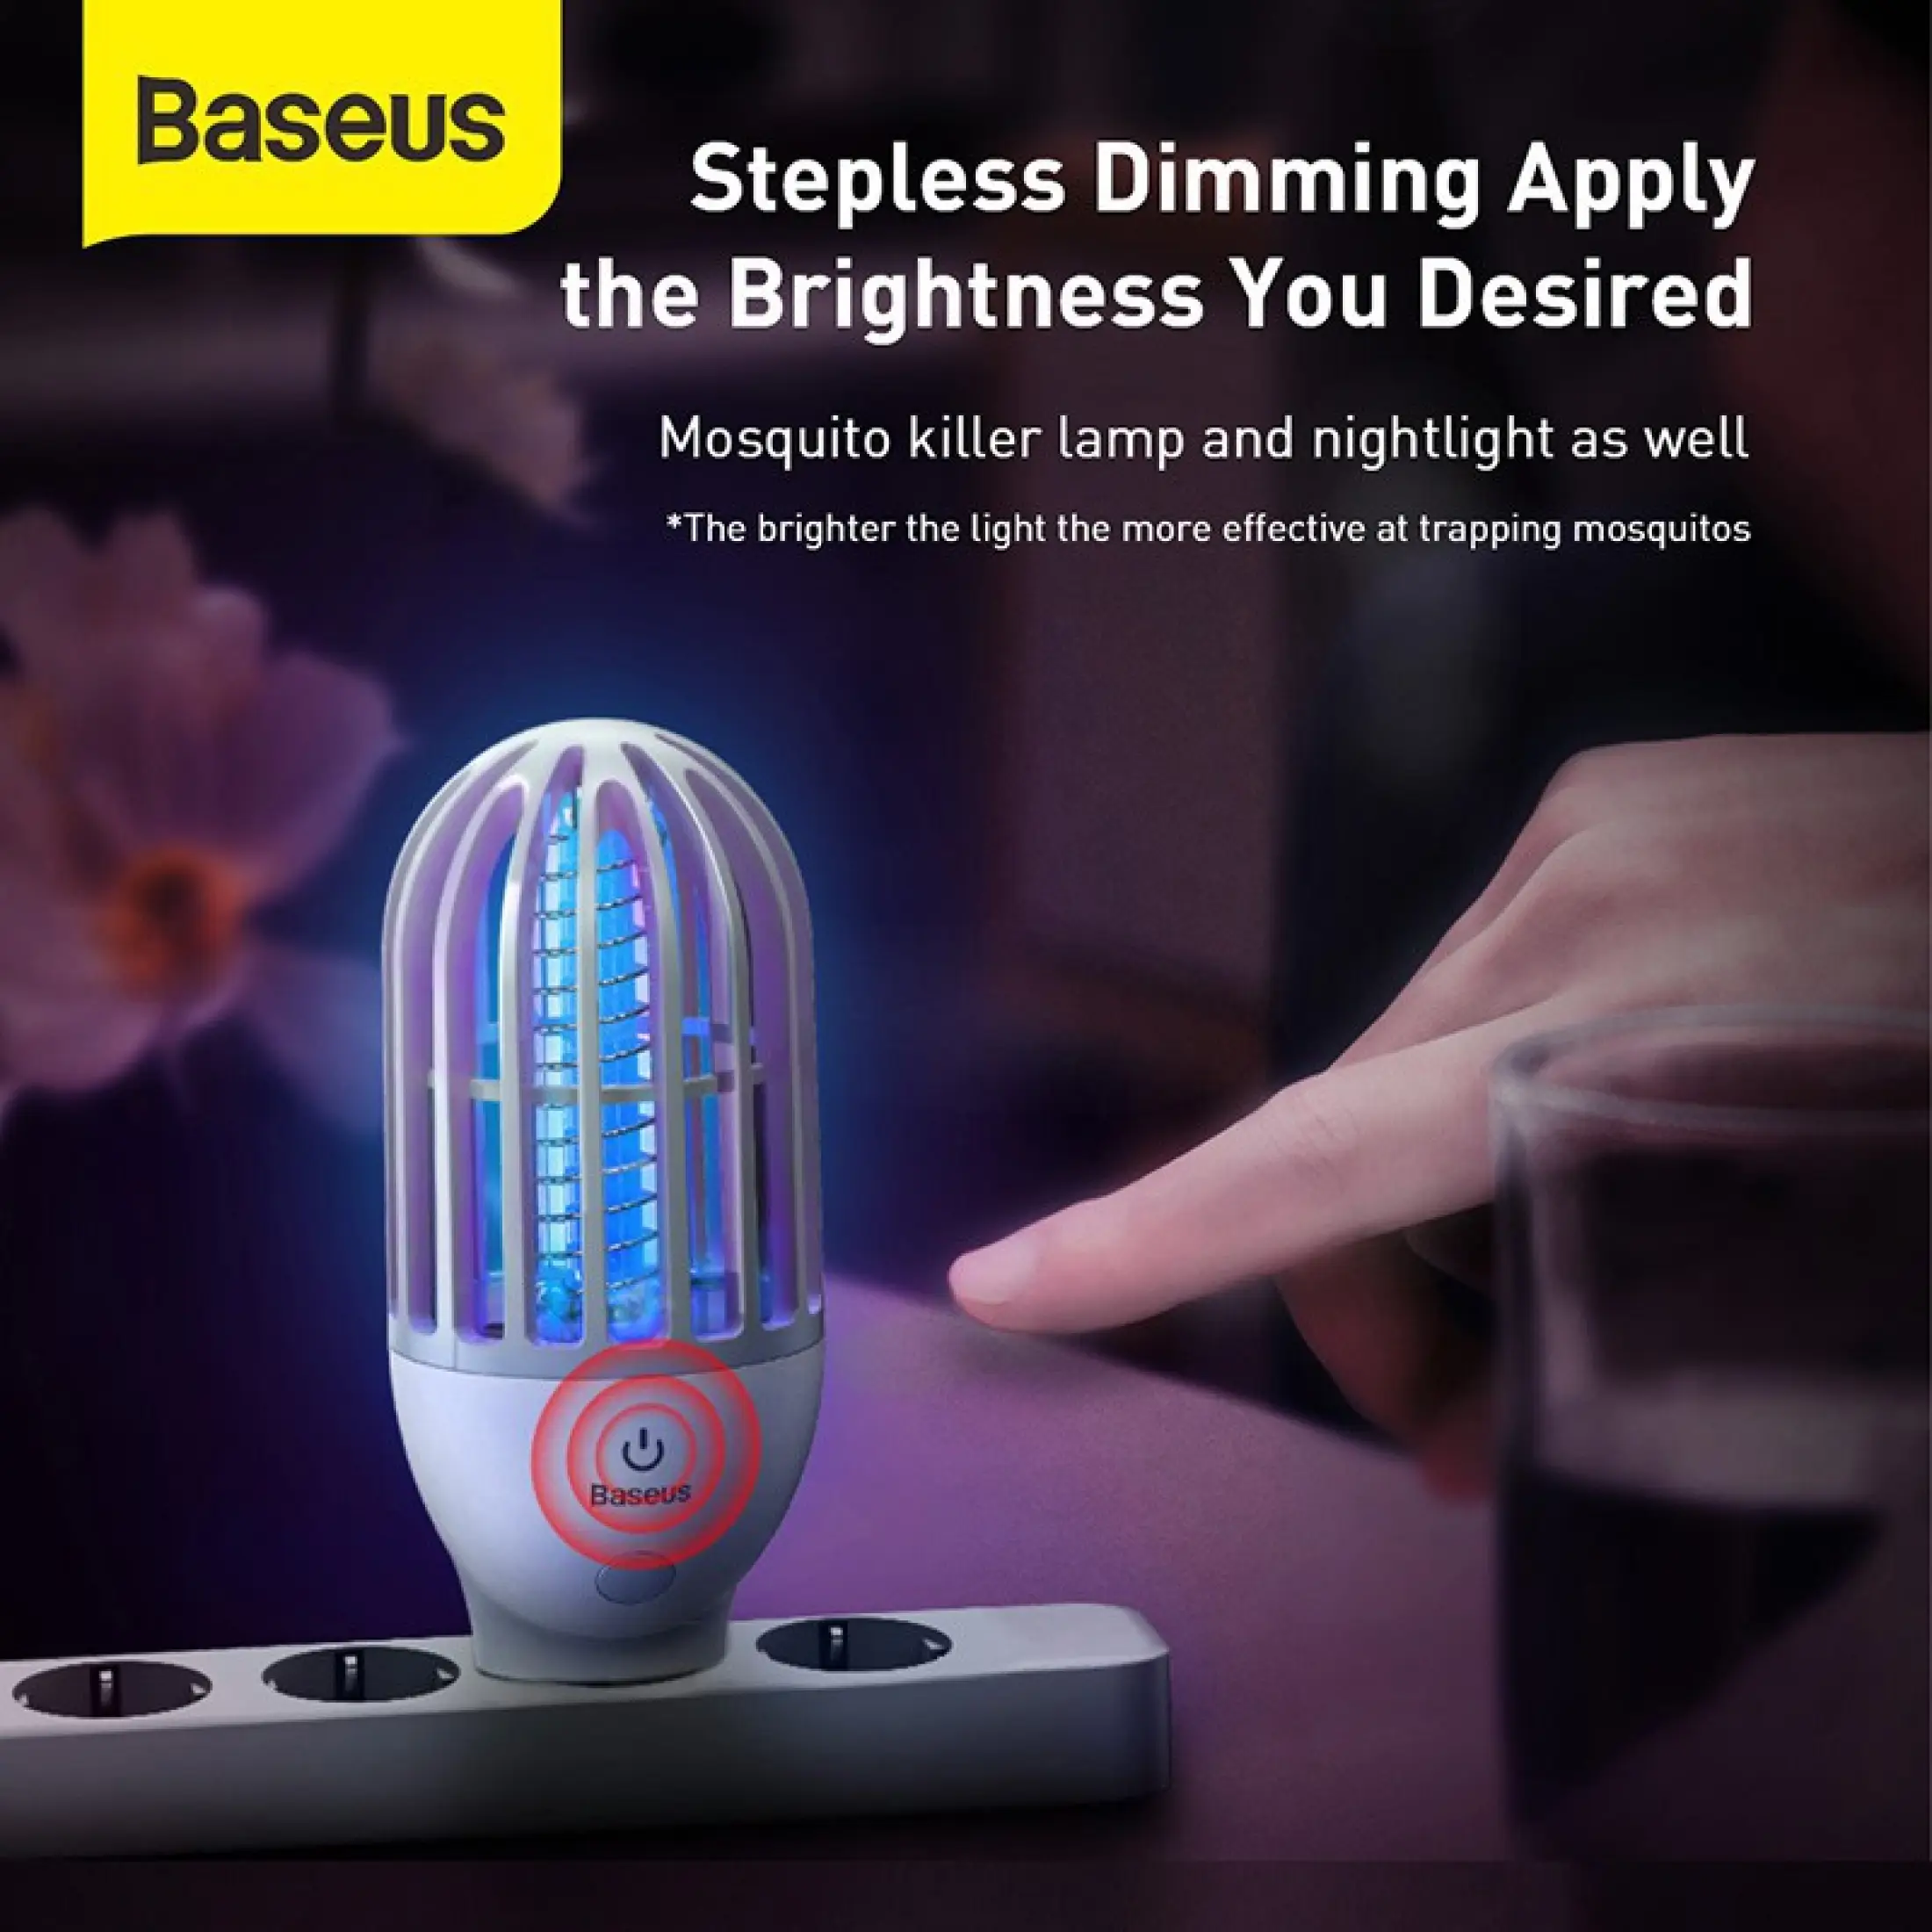 Baseus Linlon Outlet Mosquito Lamp EU Plug buy online best price in pakistan